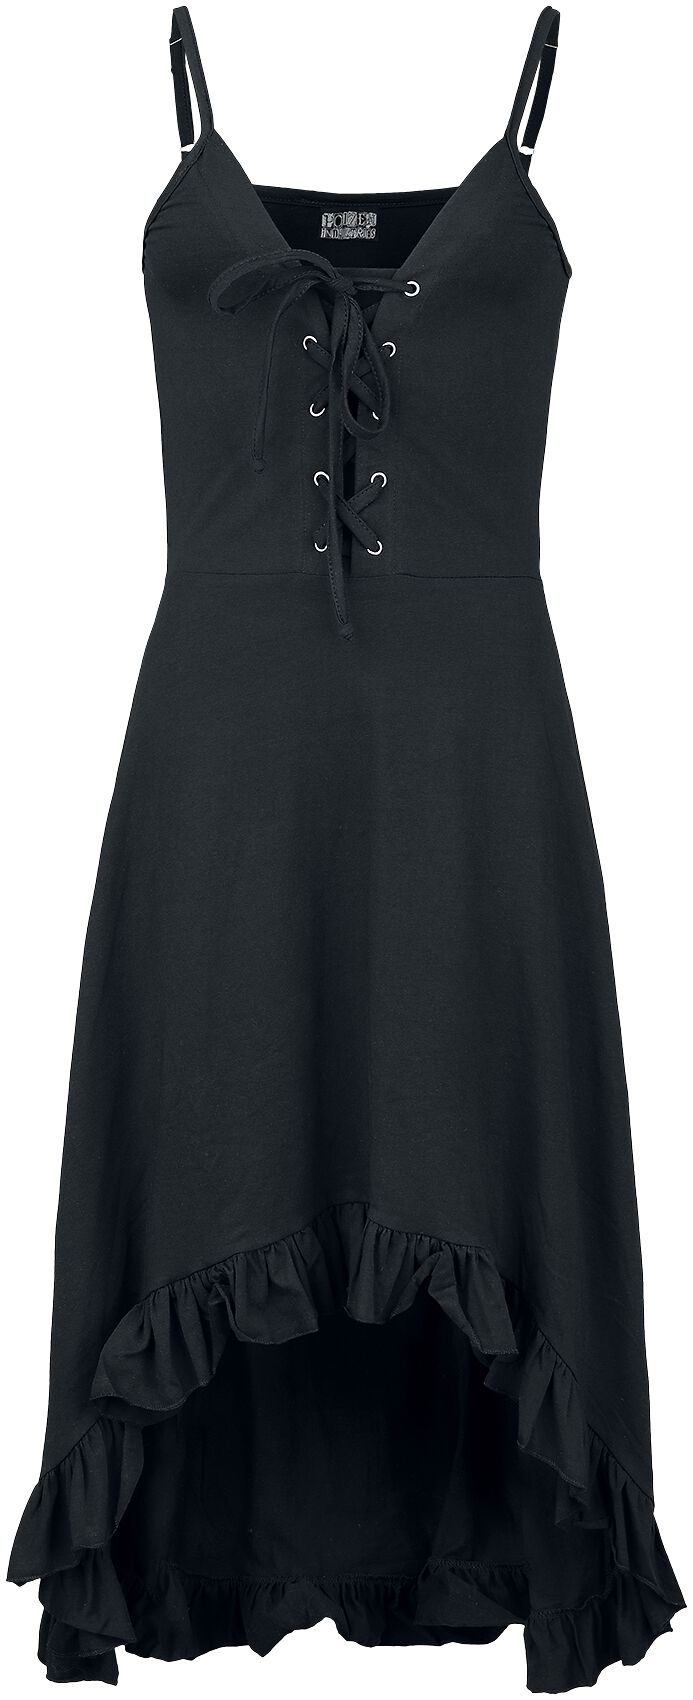 Innocent Astraea Dress Kurzes Kleid schwarz in 4XL